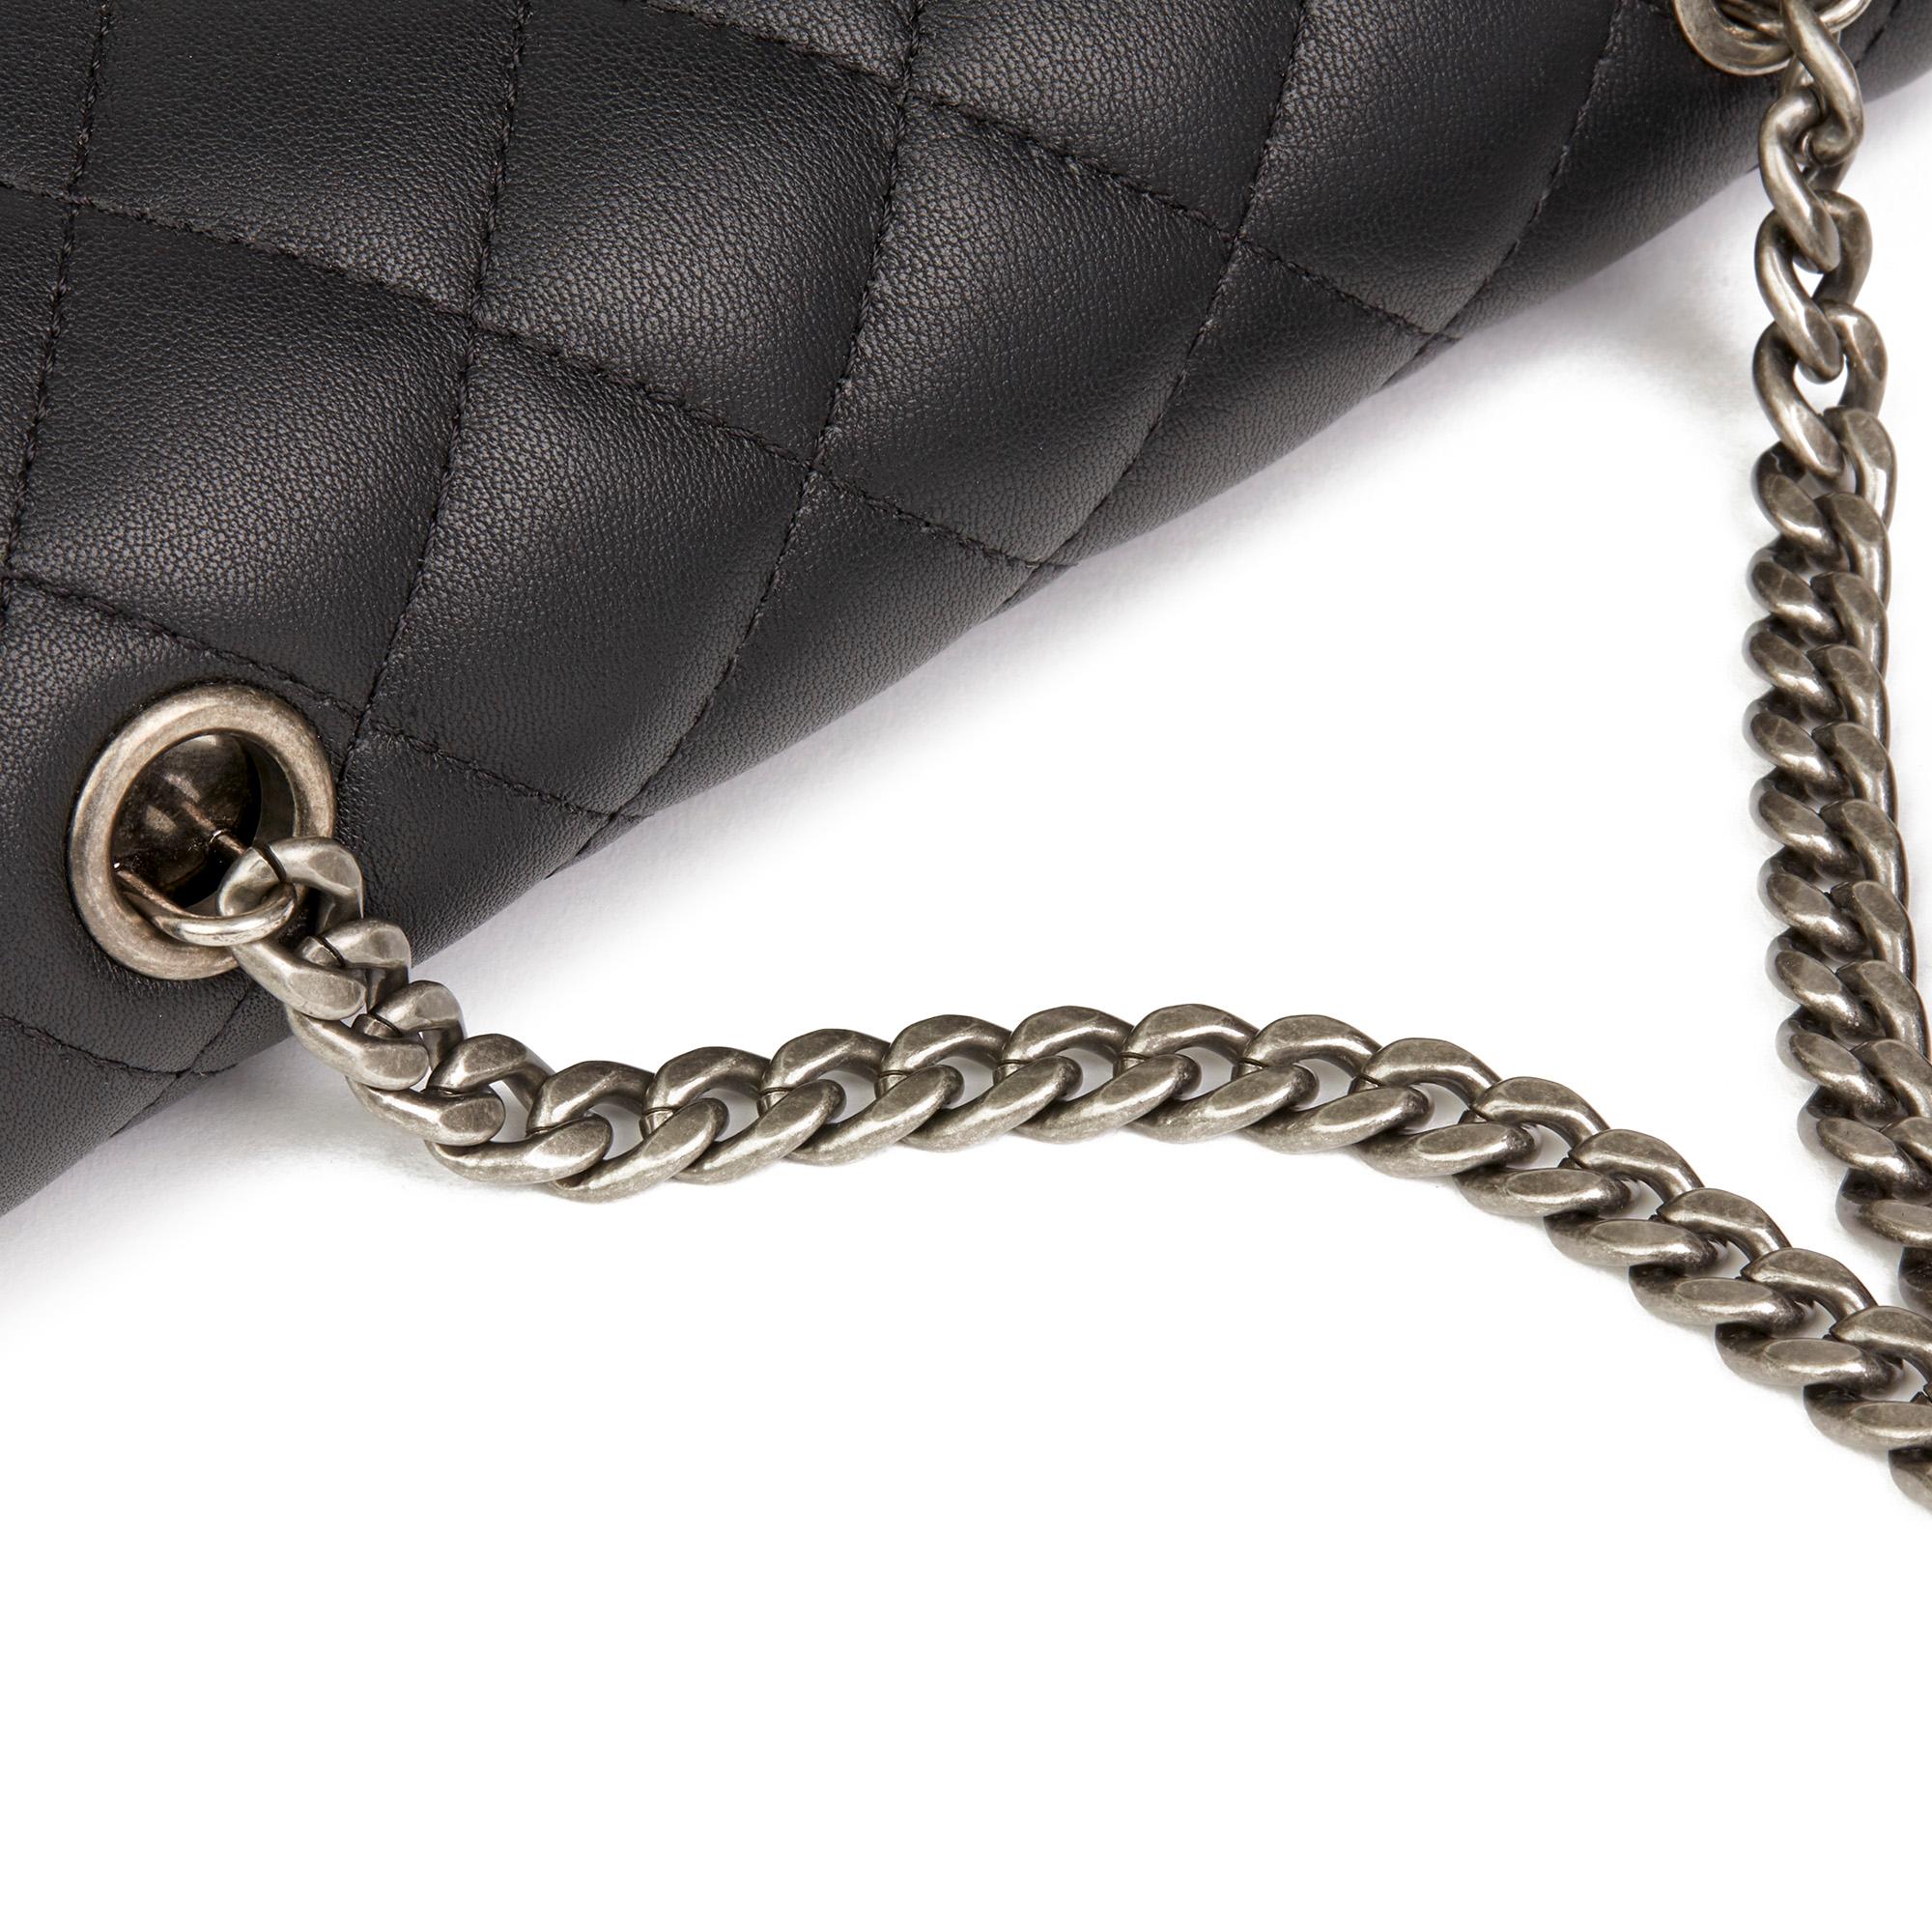 2017 Chanel Black Quilted Calfskin Leather Saddle Bag 1